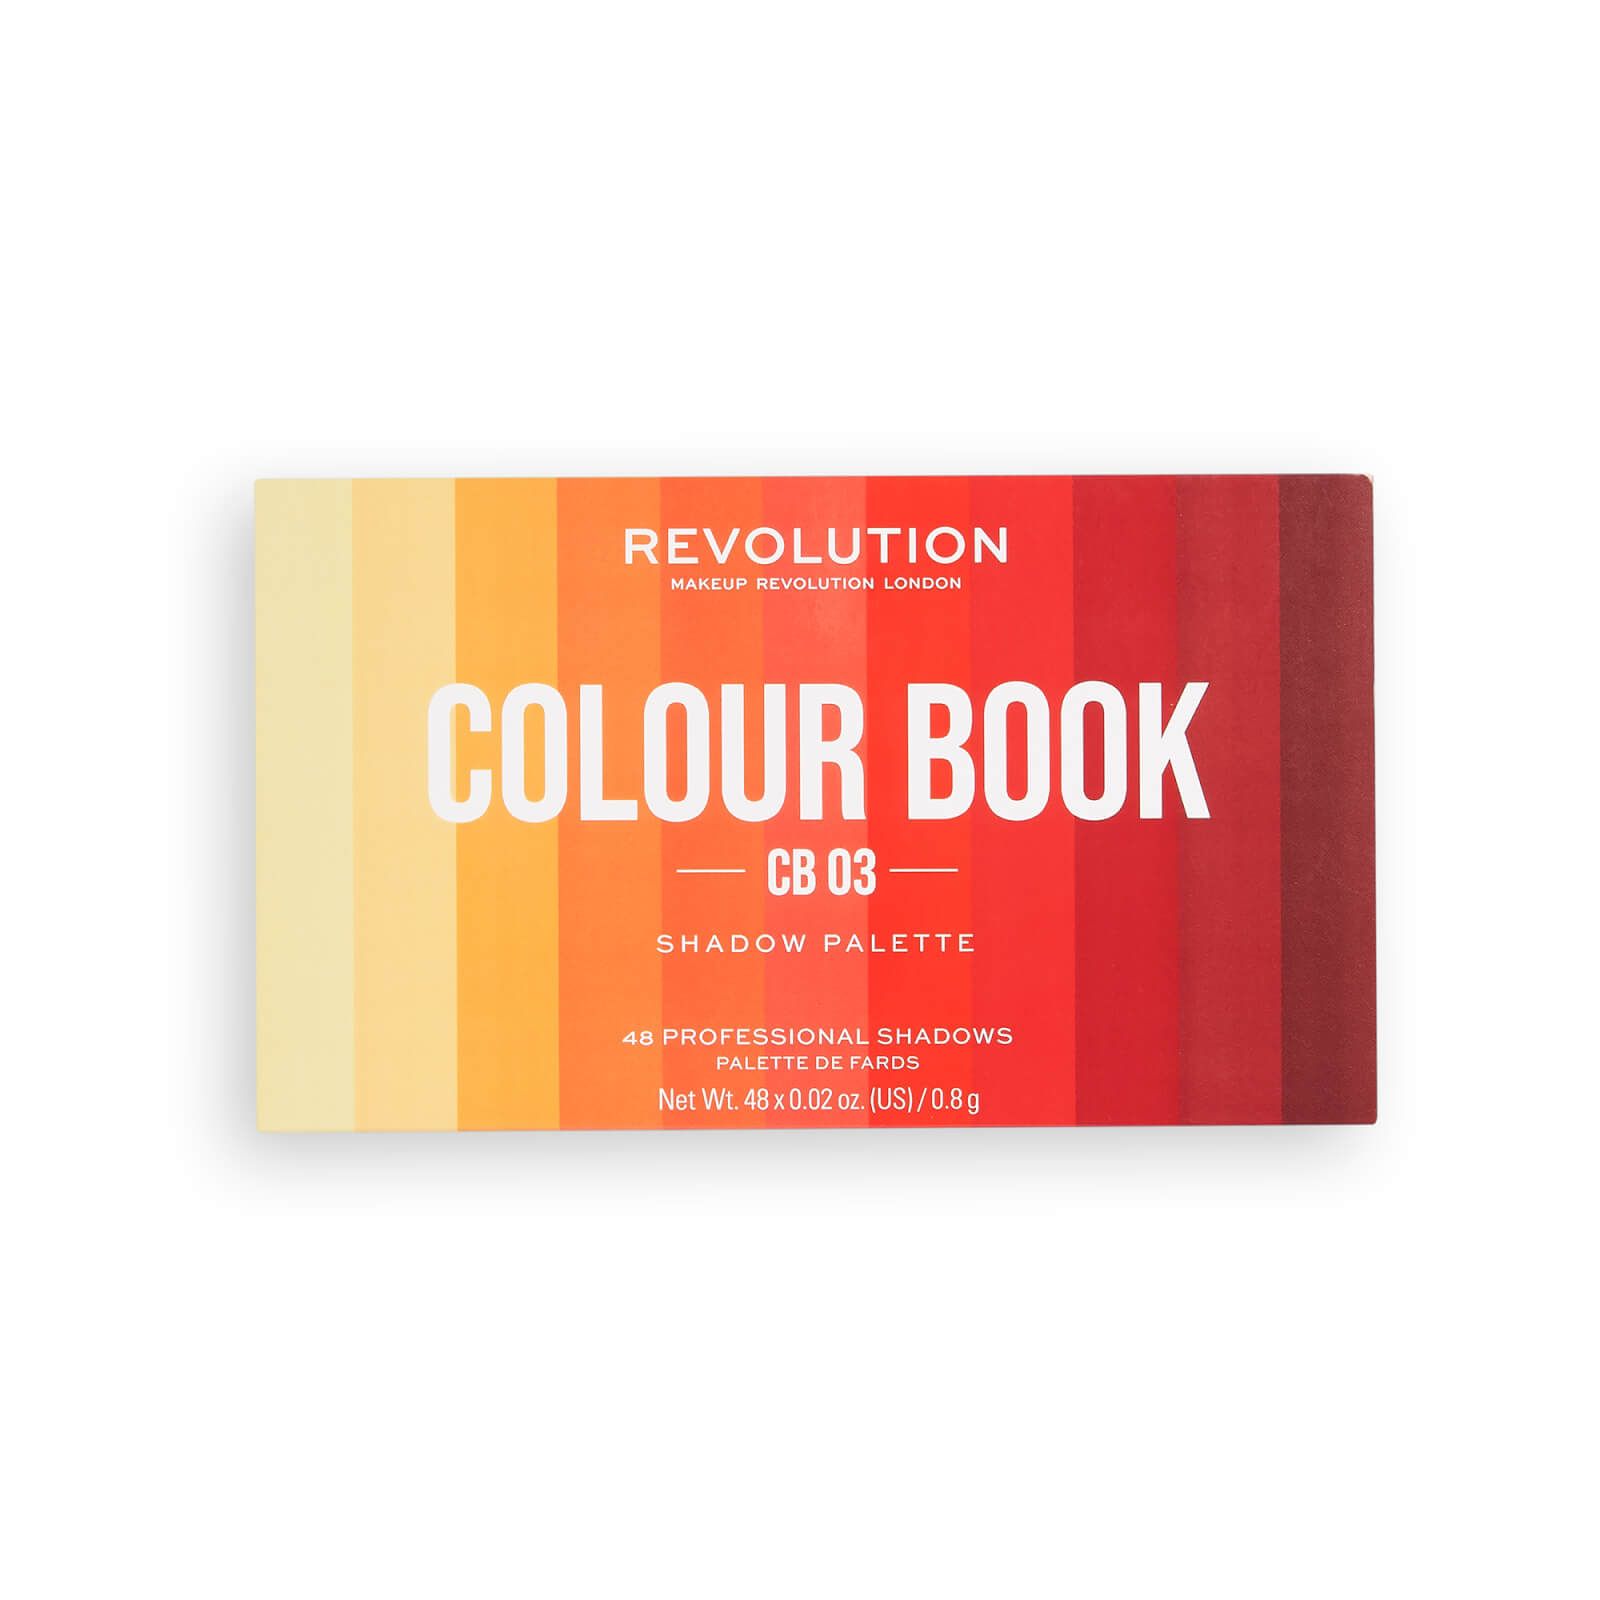 Makeup Revolution Colour Book Eye Shadow Palette - CB03 | Revolution Beauty US